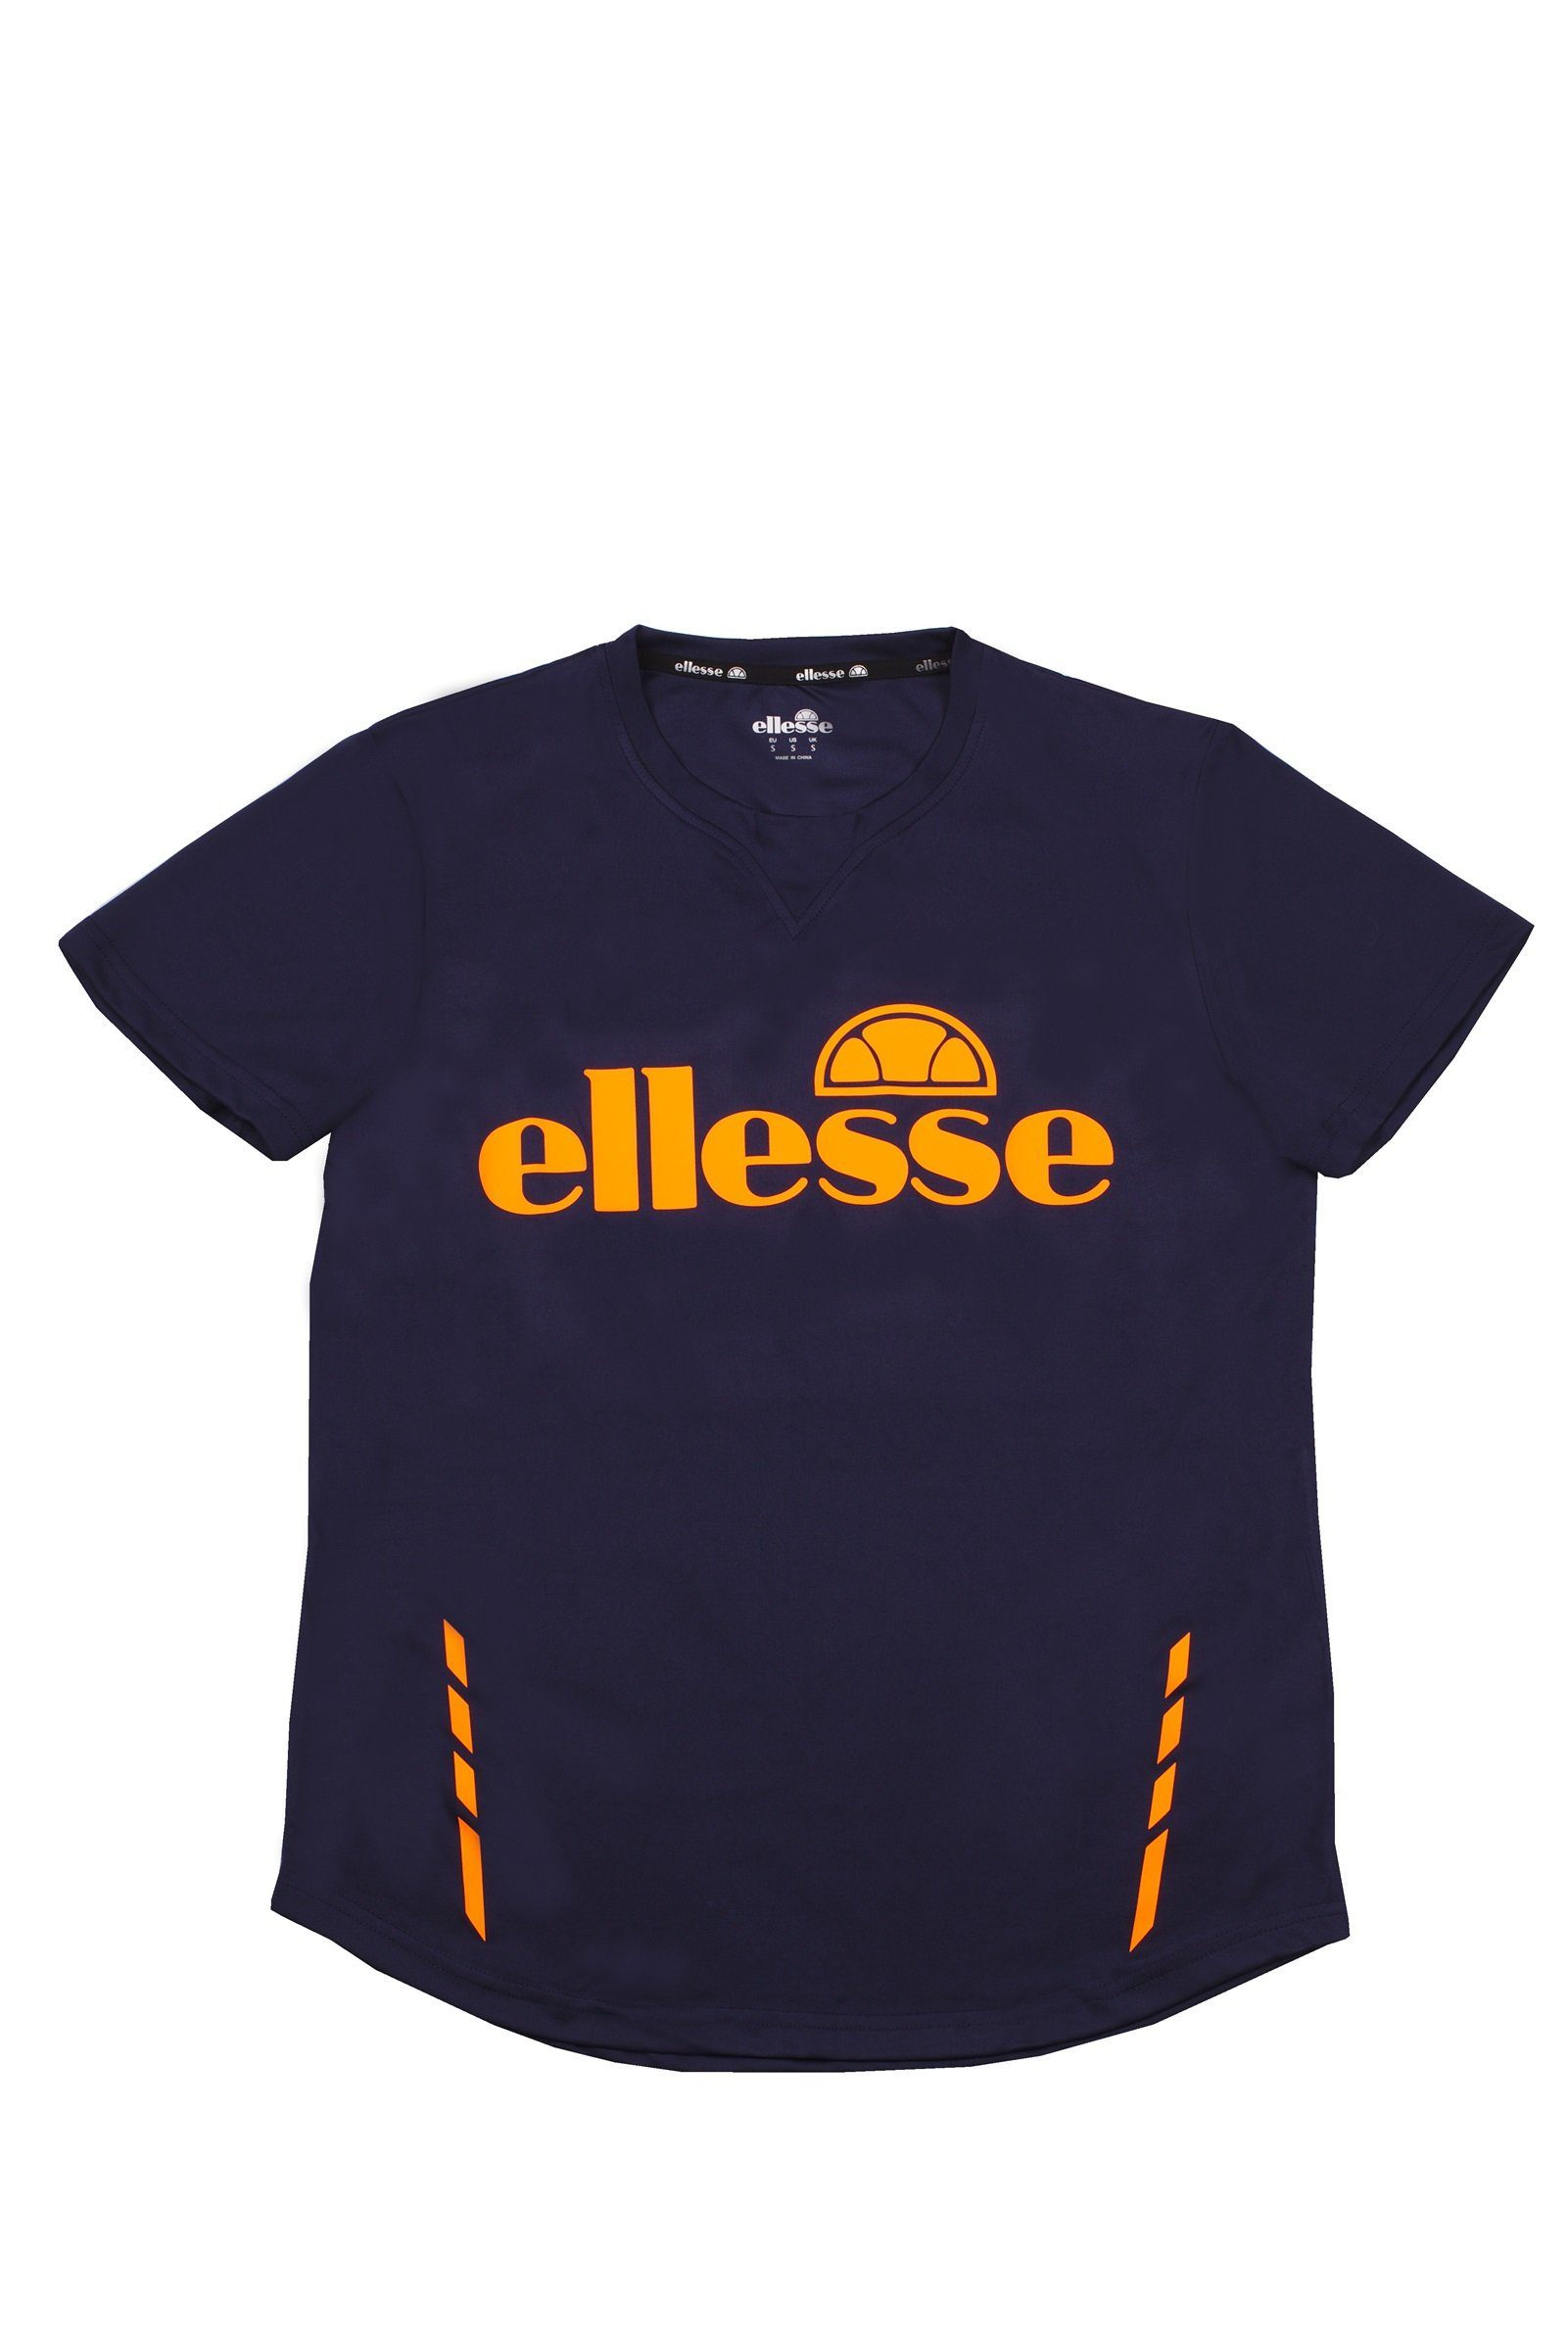 T-Shirt Ellesse T-Shirt Ottagano Herren Adult Ellesse